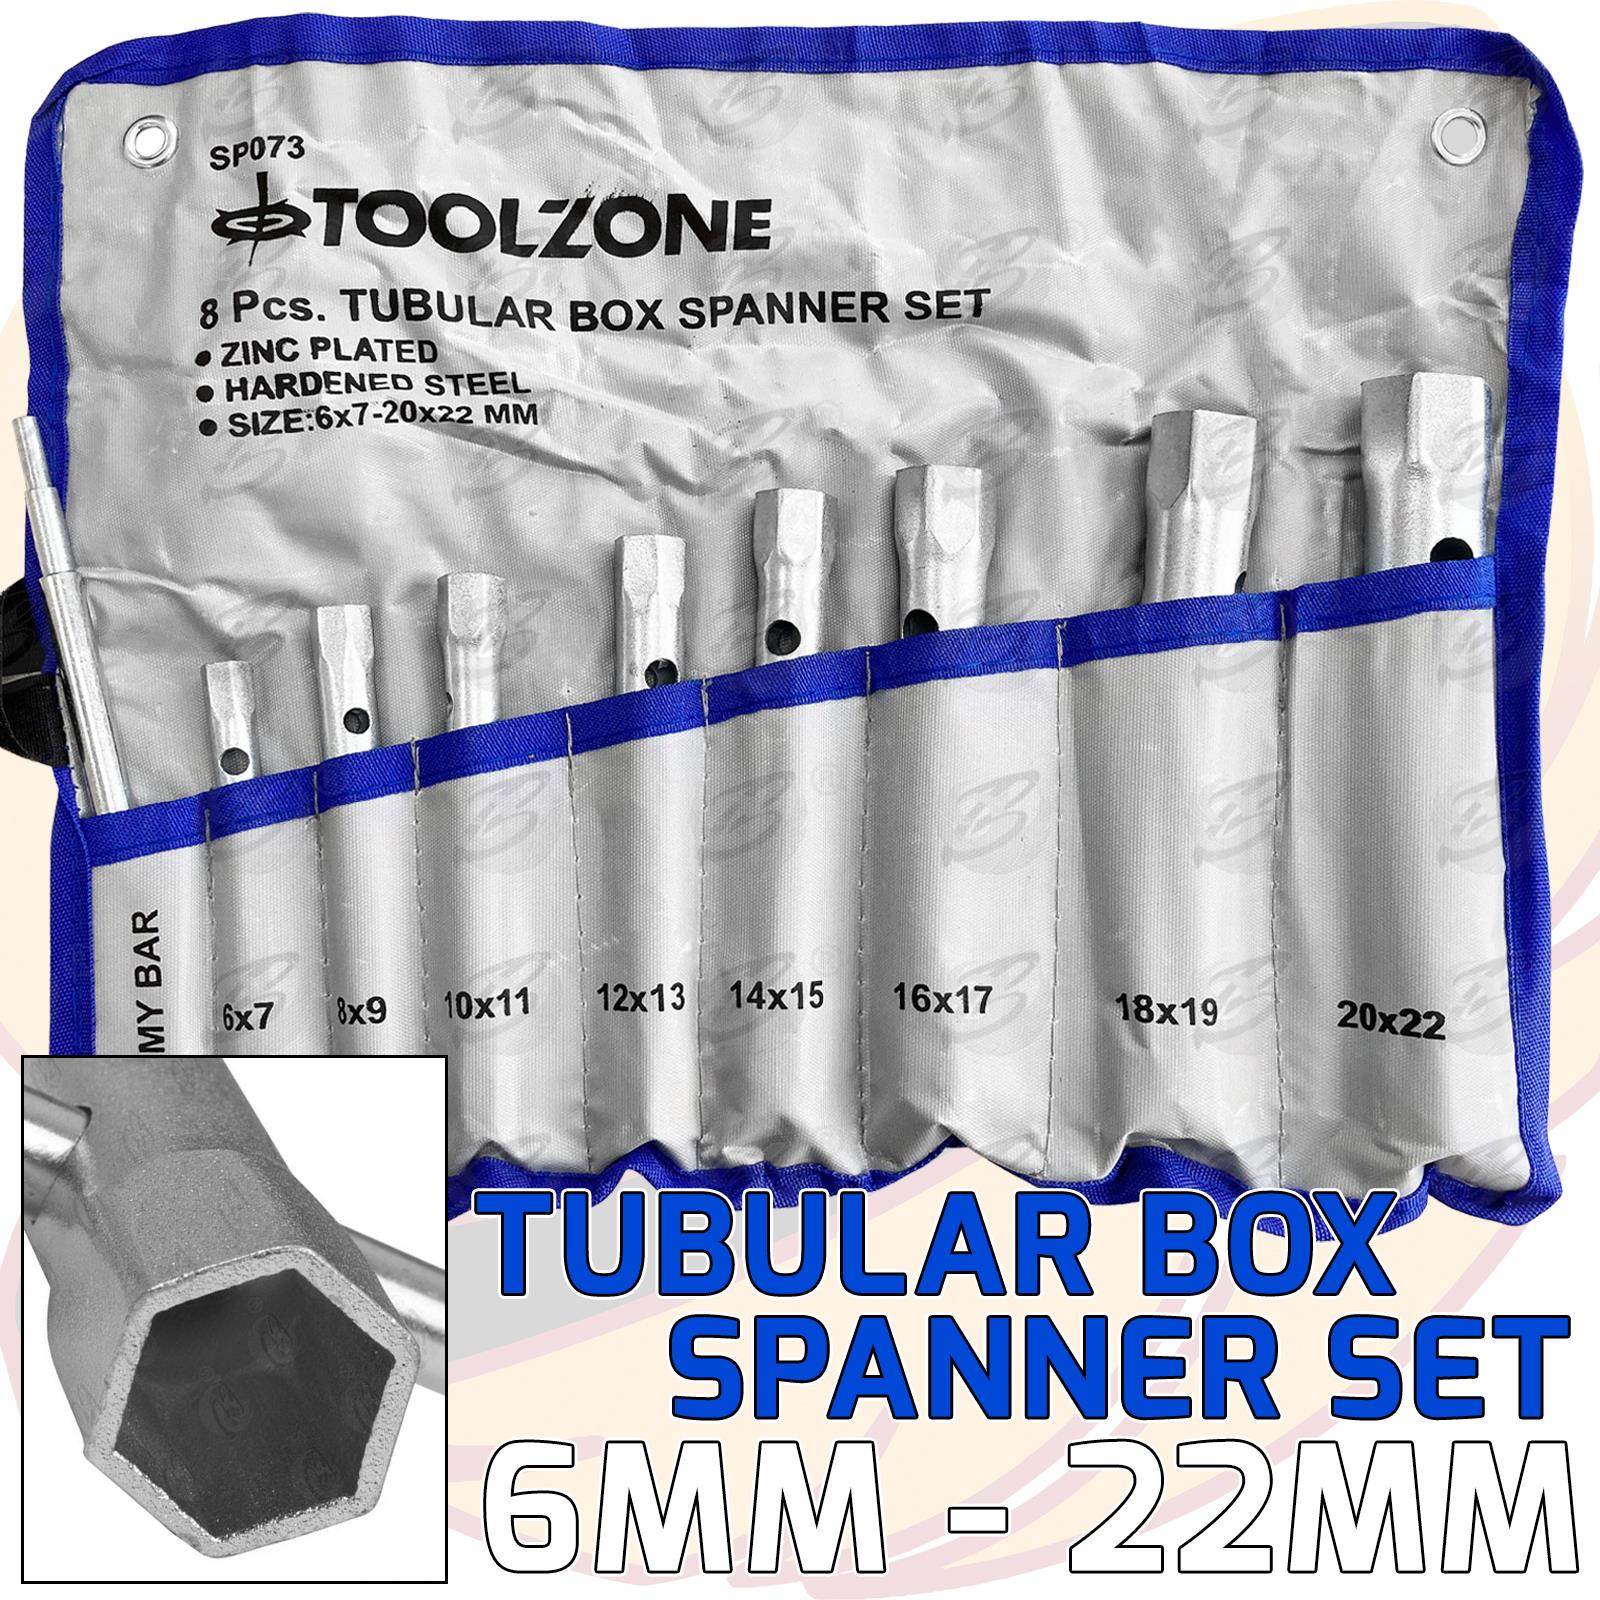 TOOLZONE 8PCS TUBULAR BOX SPANNERS 6MM - 22MM